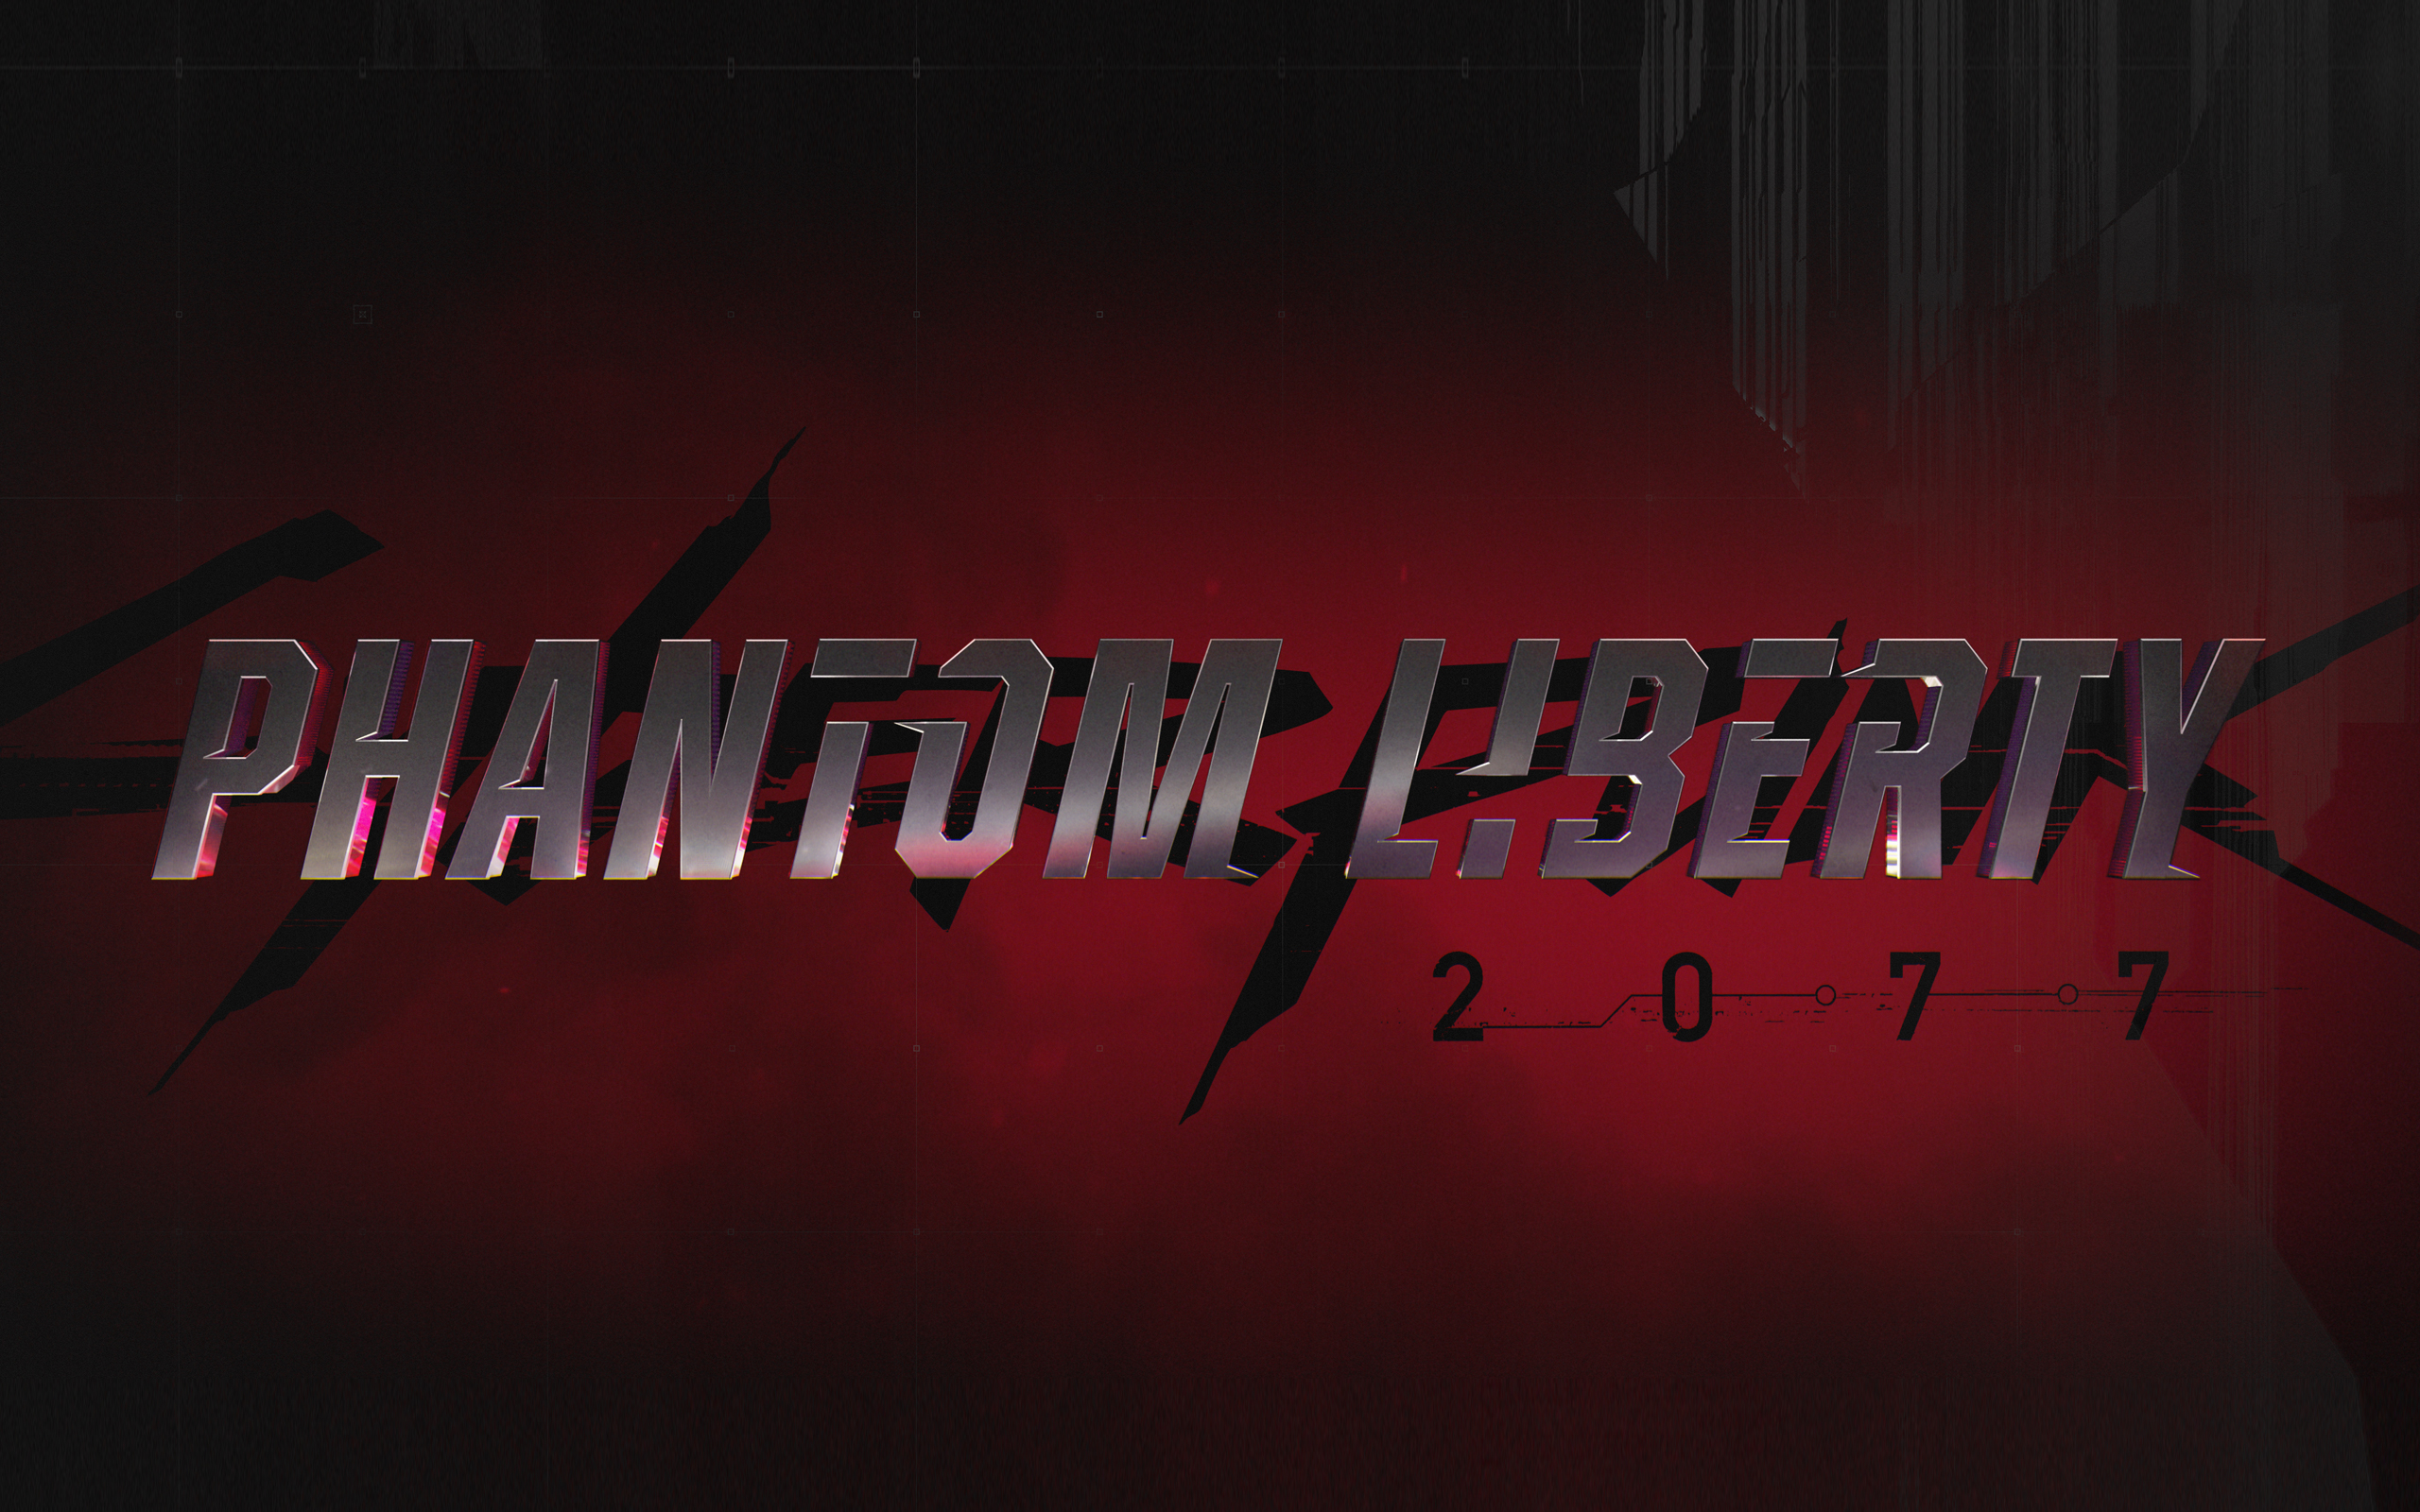 Samurai Wallpaper 4K, Cyberpunk 2077: Phantom Liberty